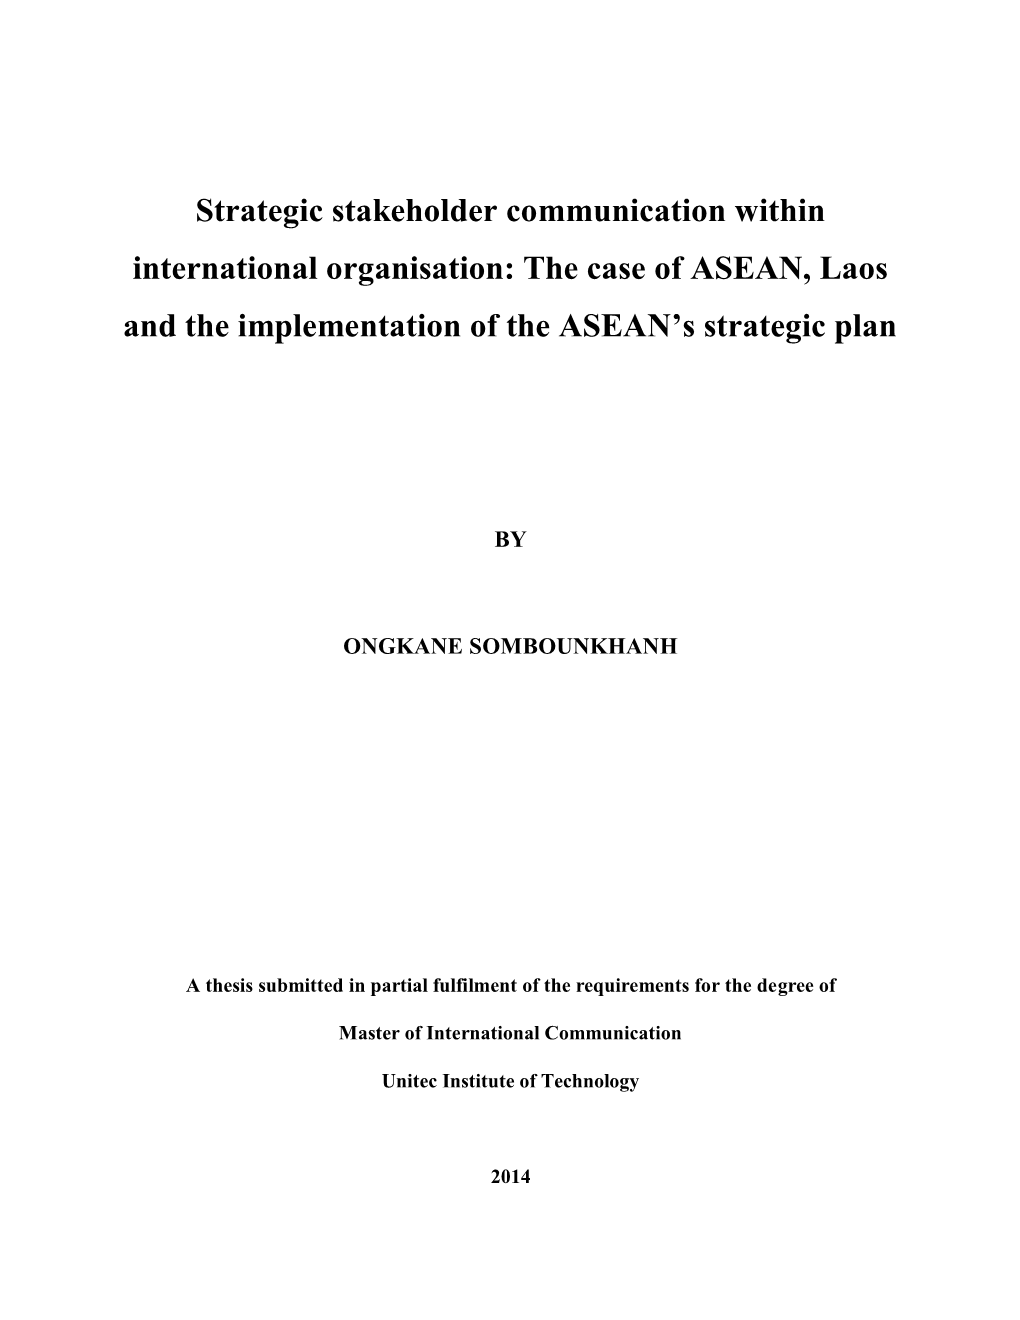 Strategic Stakeholder Communication Within International Organisation: the Case of ASEAN, Laos and the Implementation of the ASEAN’S Strategic Plan